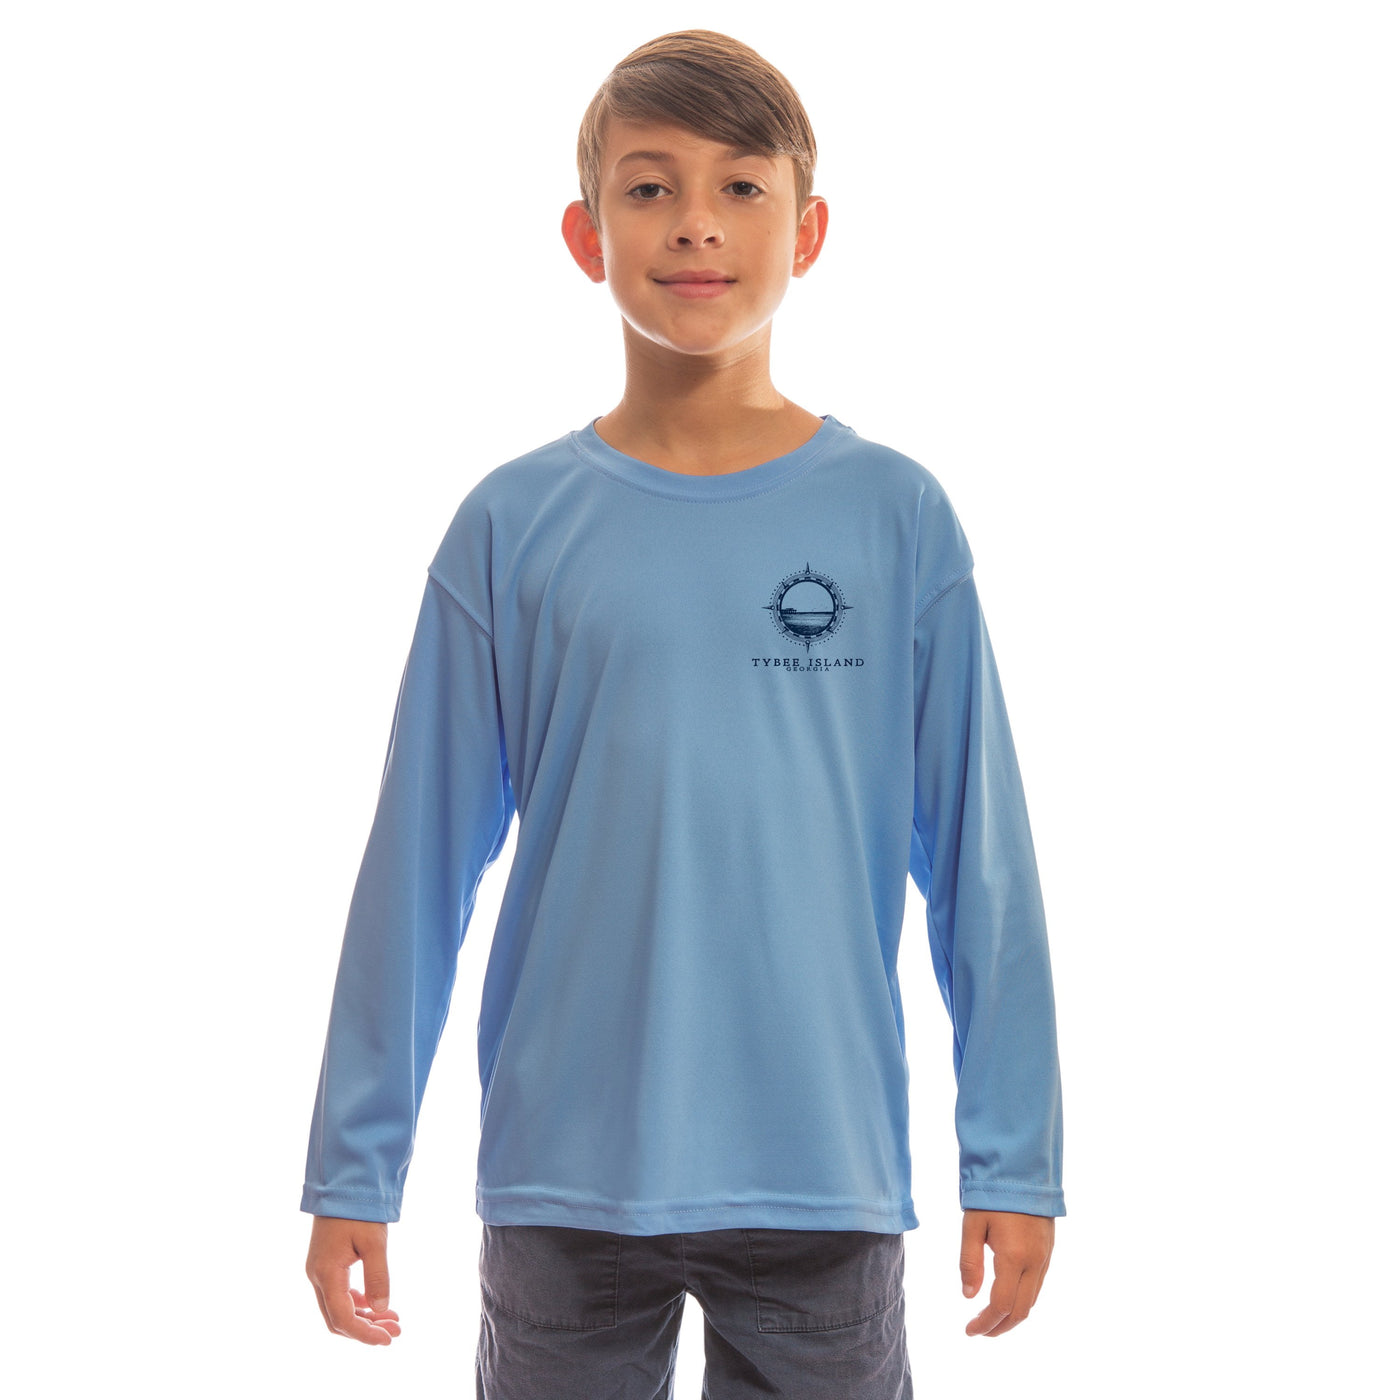 Compass Vintage Tybee Island Youth UPF 50+ UV/Sun Protection Long Sleeve T-Shirt